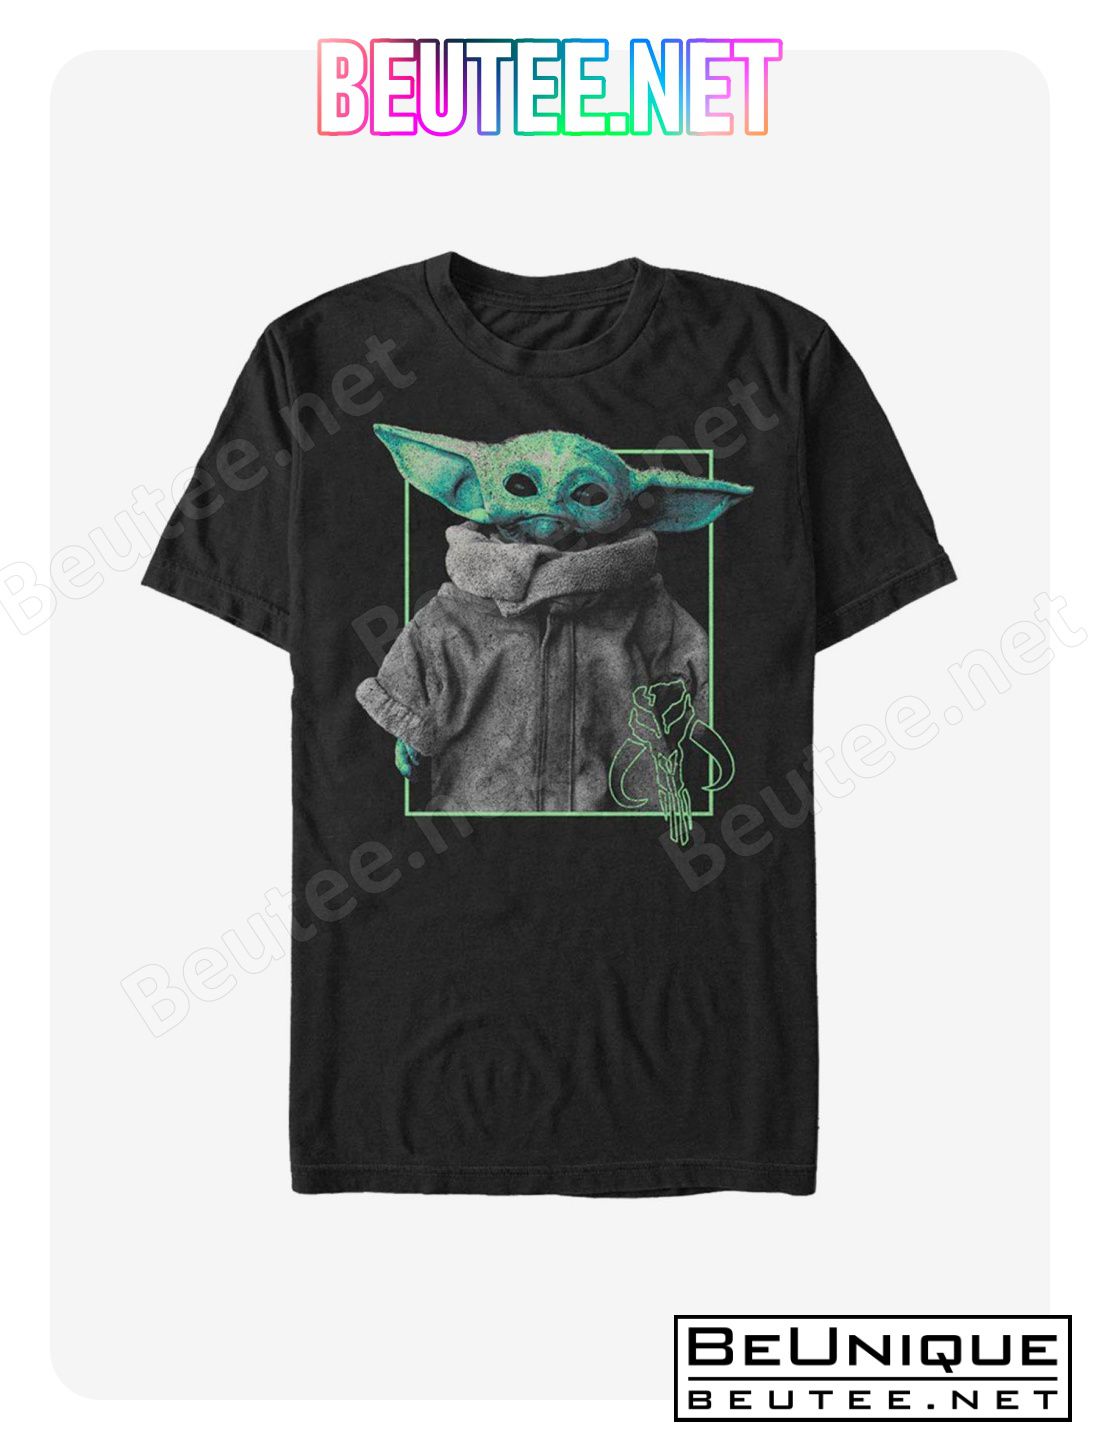 Star Wars The Mandalorian The Child Prodigy T-Shirt